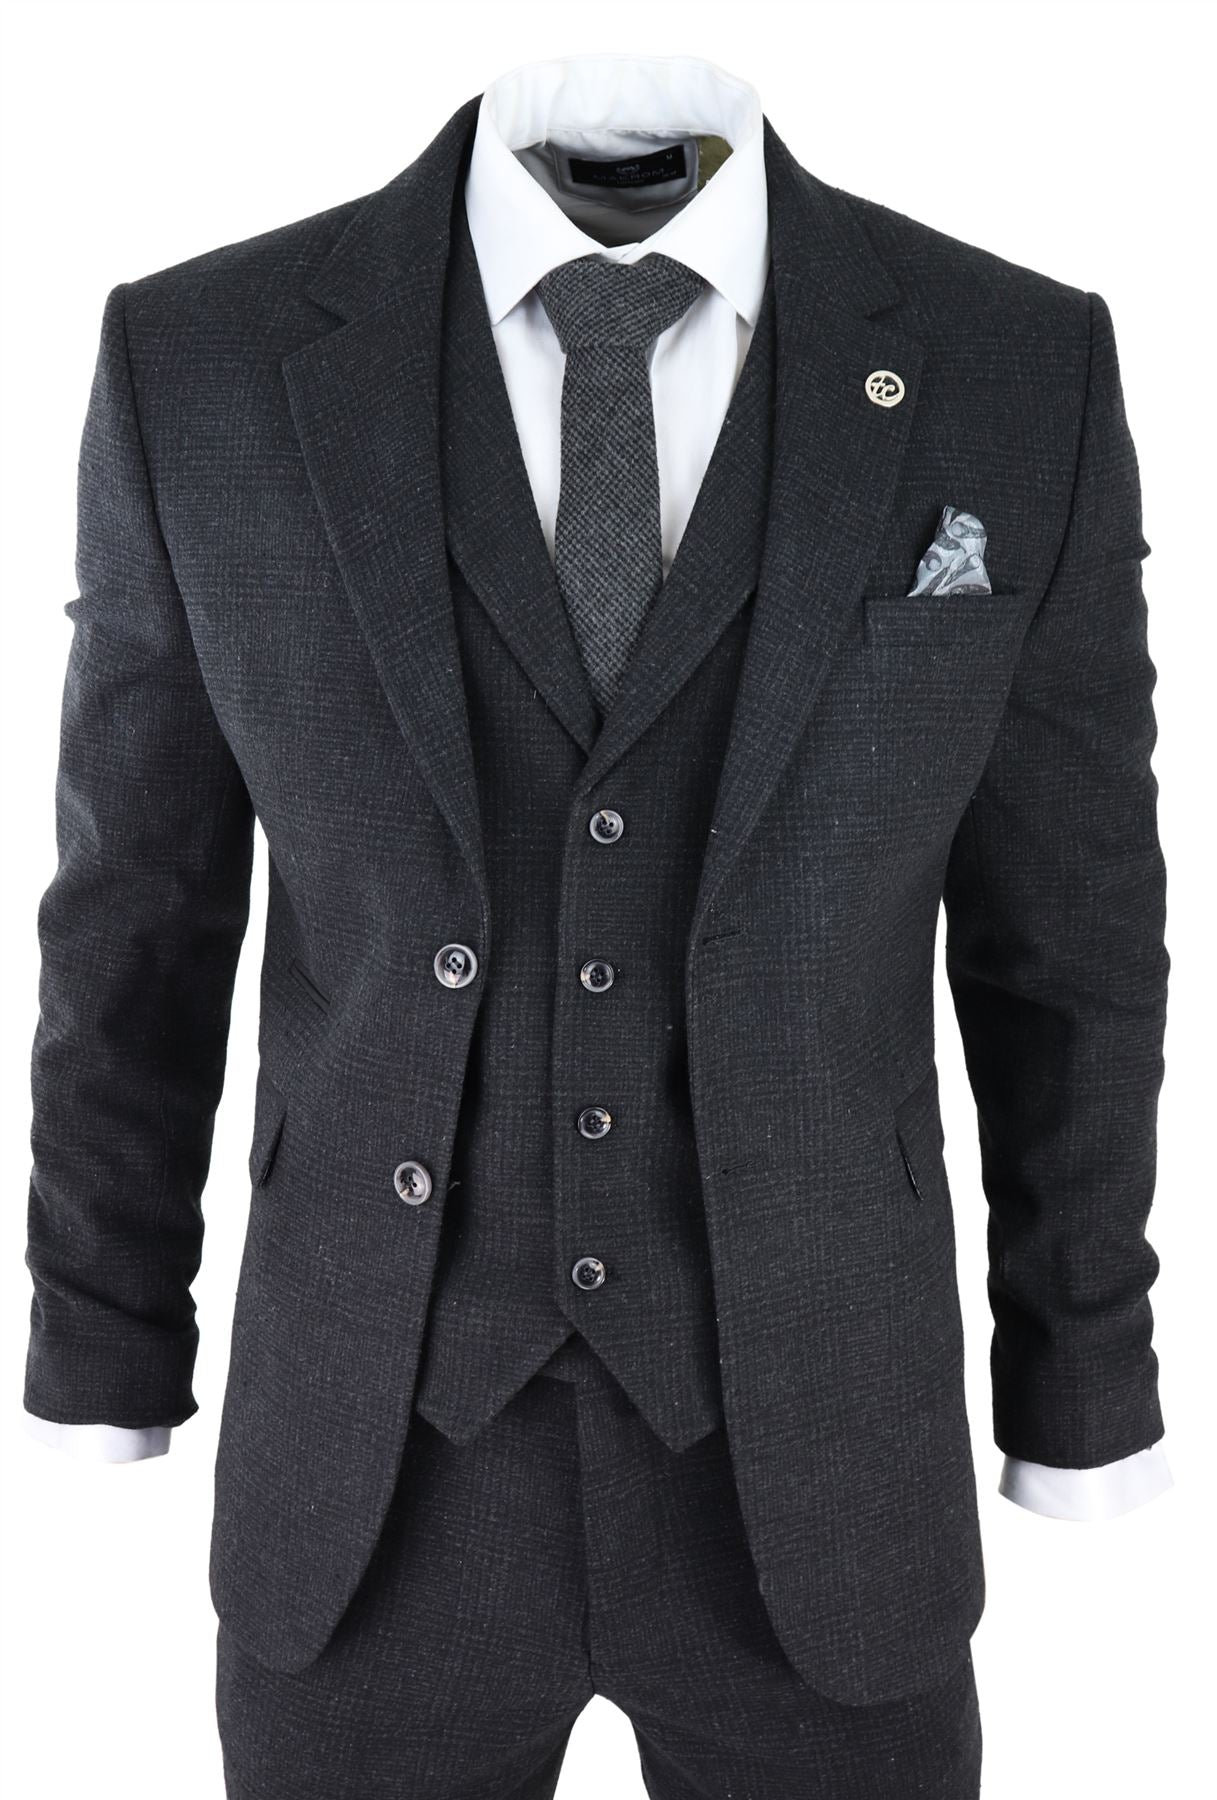 Mens Black Tweed 3 Piece Suit Check Vintage 1920s Gatsby | Etsy UK